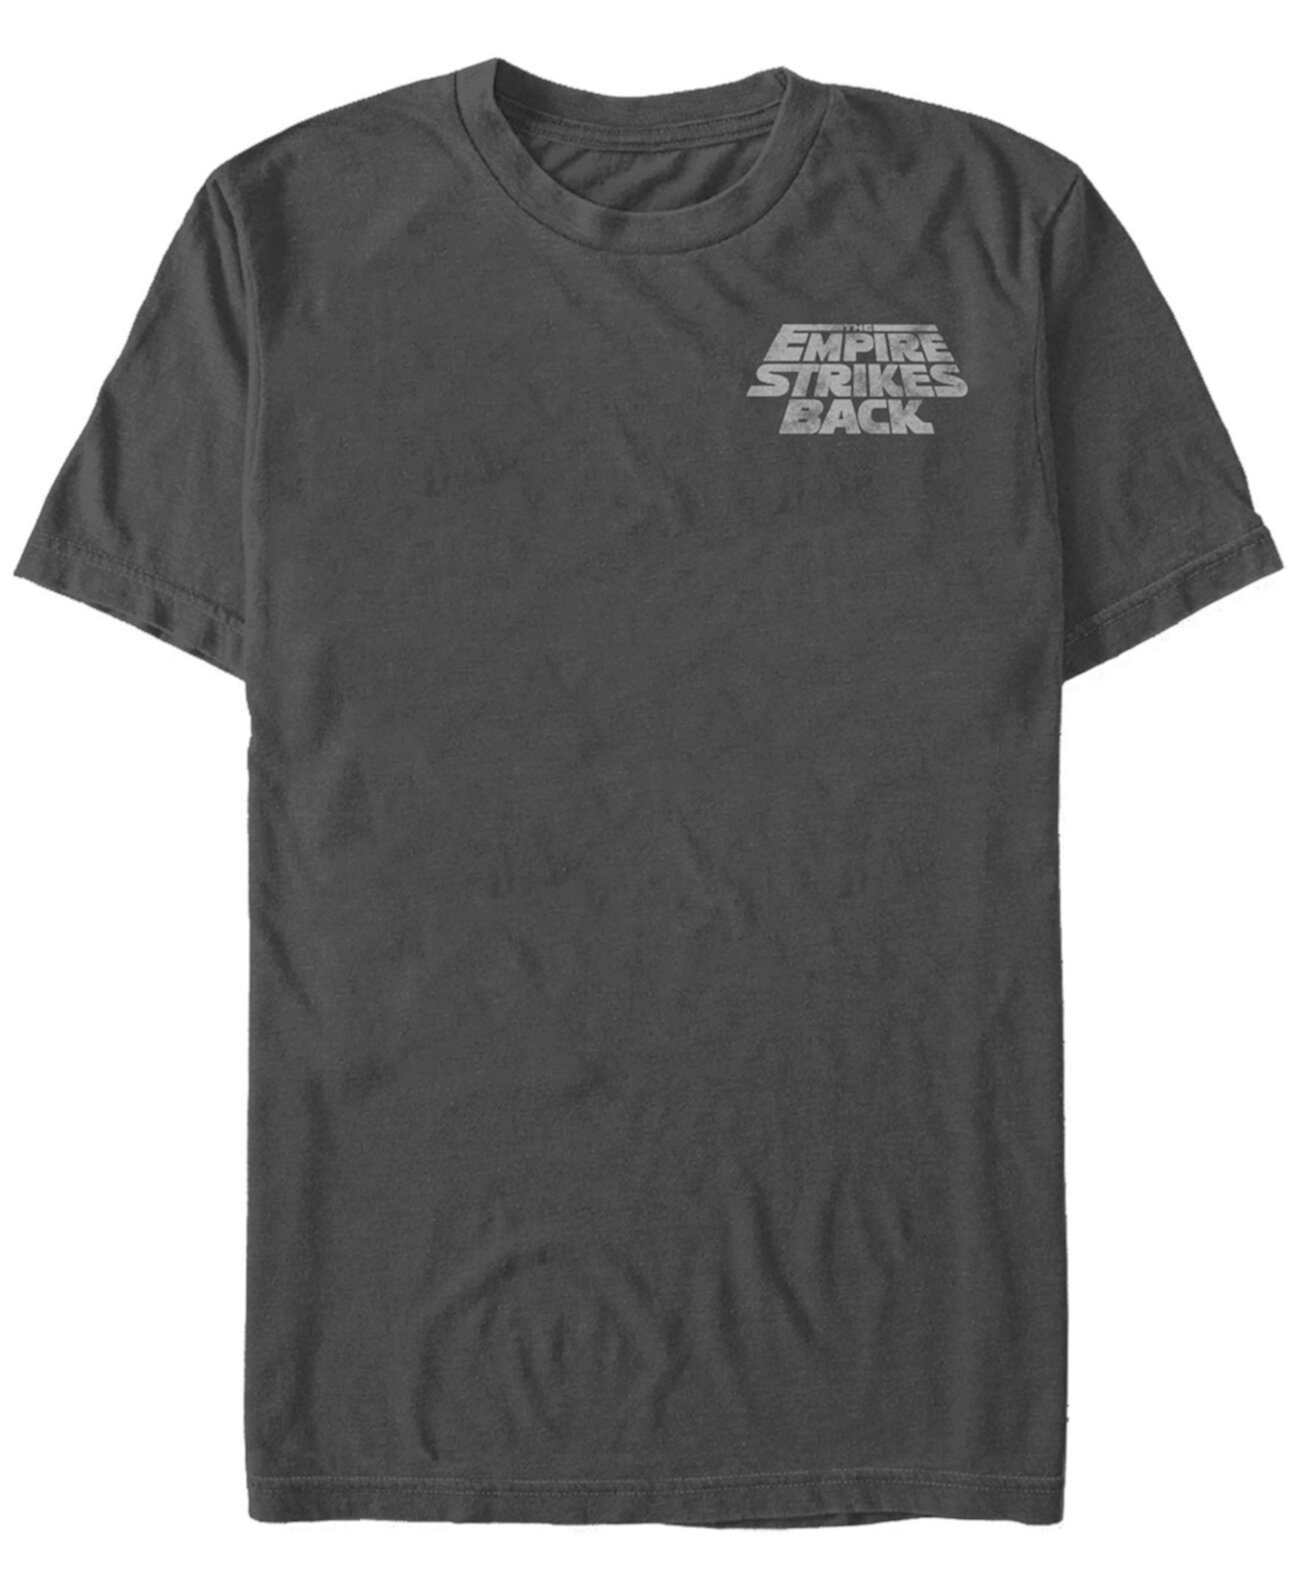 Мужская футболка с короткими рукавами и логотипом Star Wars The Empire Strikes Back FIFTH SUN